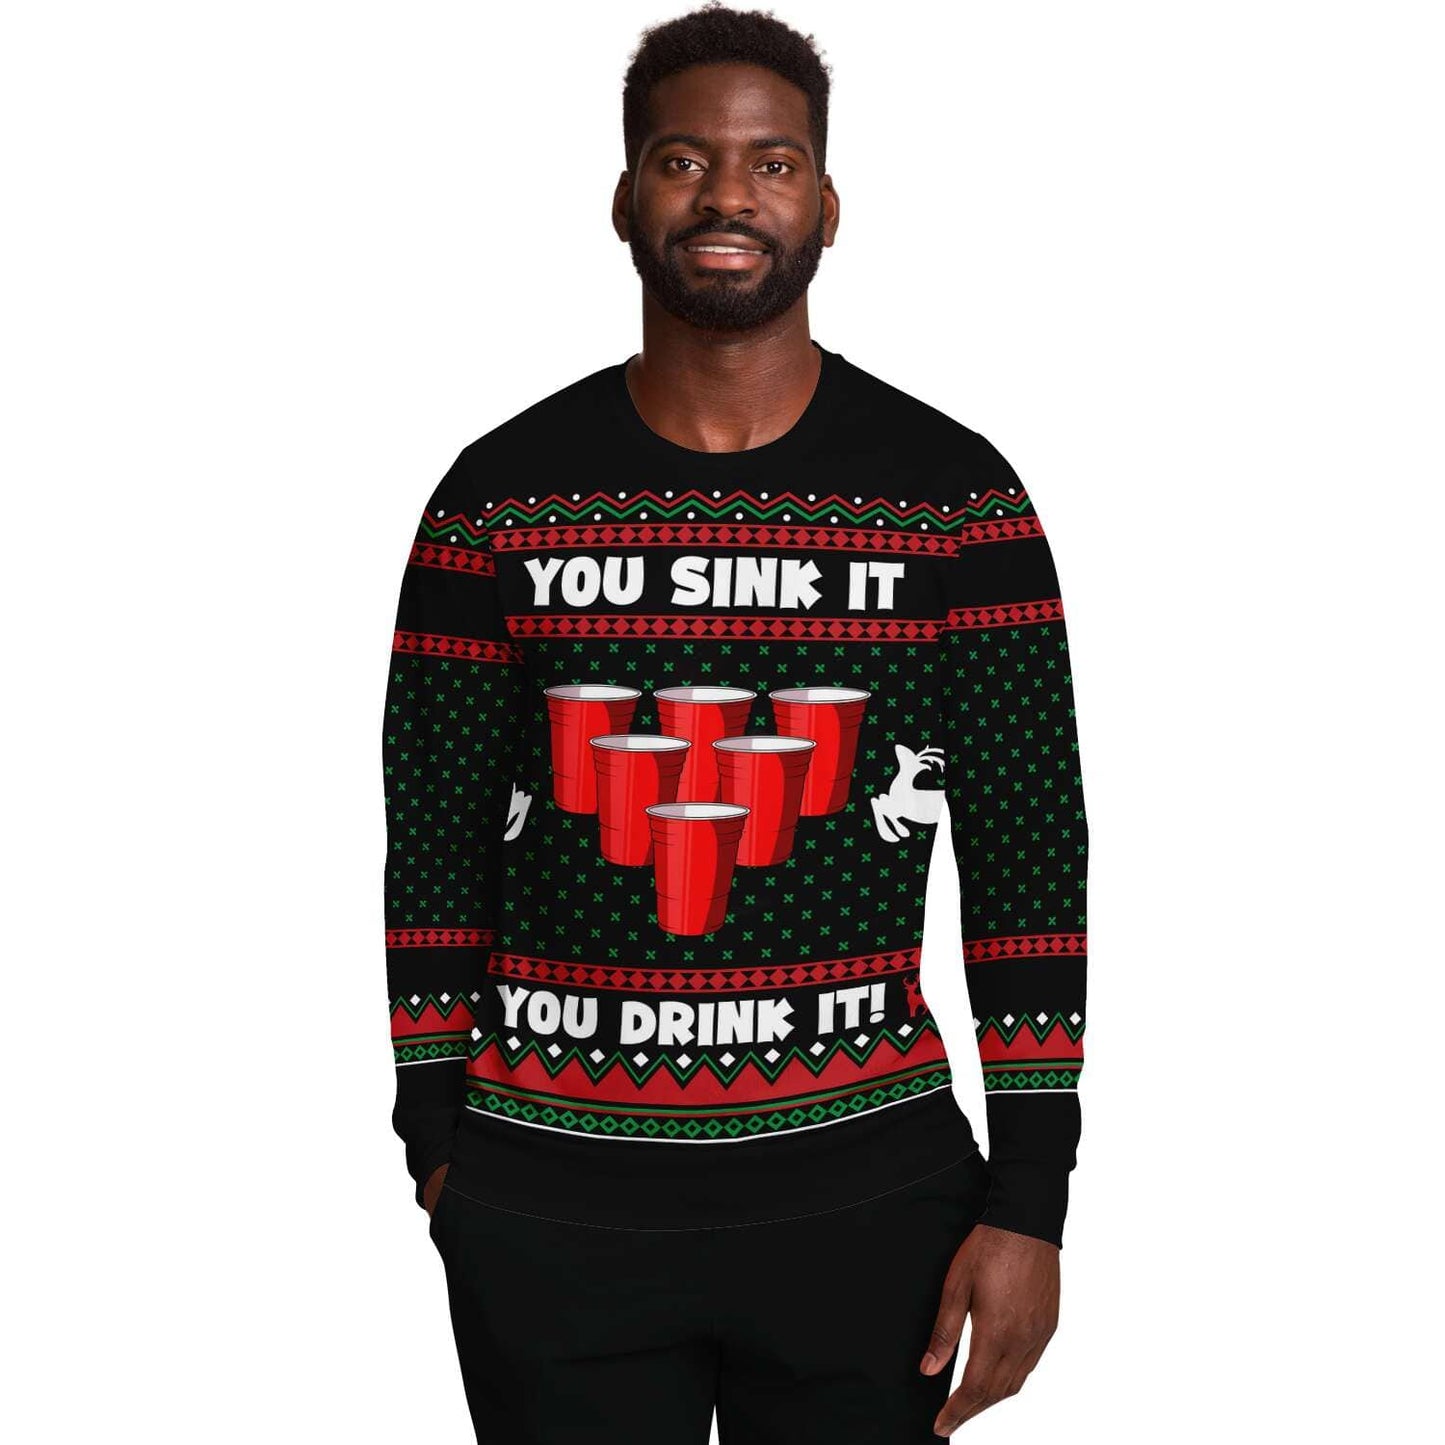 You Sink It You Drink It - Funny Beer Pong Ugly Christmas Sweater (Sweatshirt)